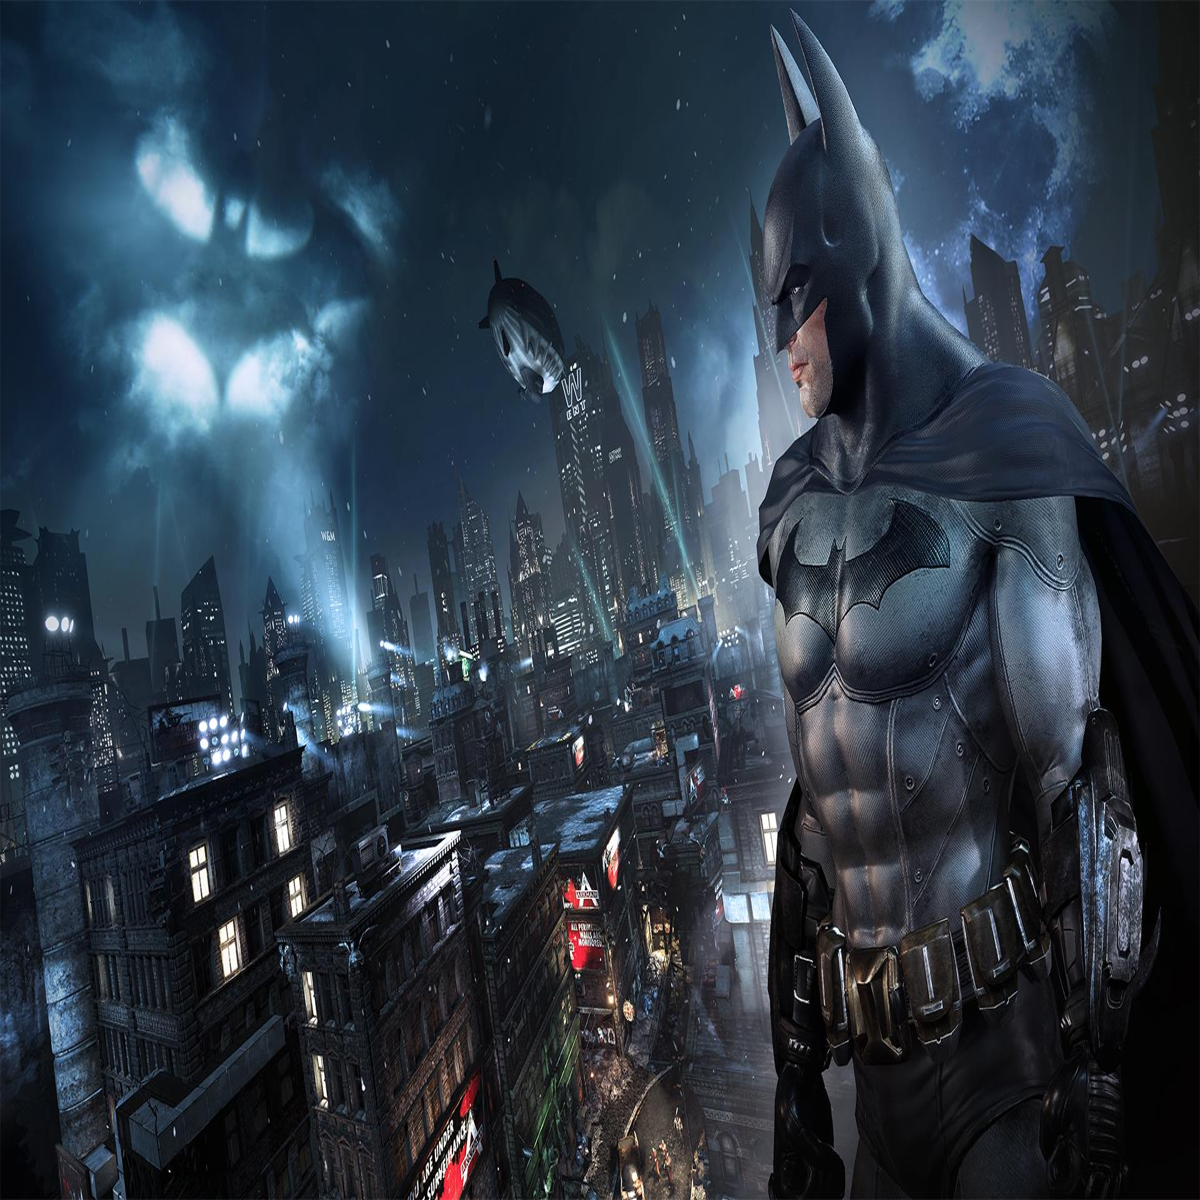 BATMAN Arkham Asylum FULL GAME Walkthrough Gameplay [4K 60FPS] - No  Commentary 